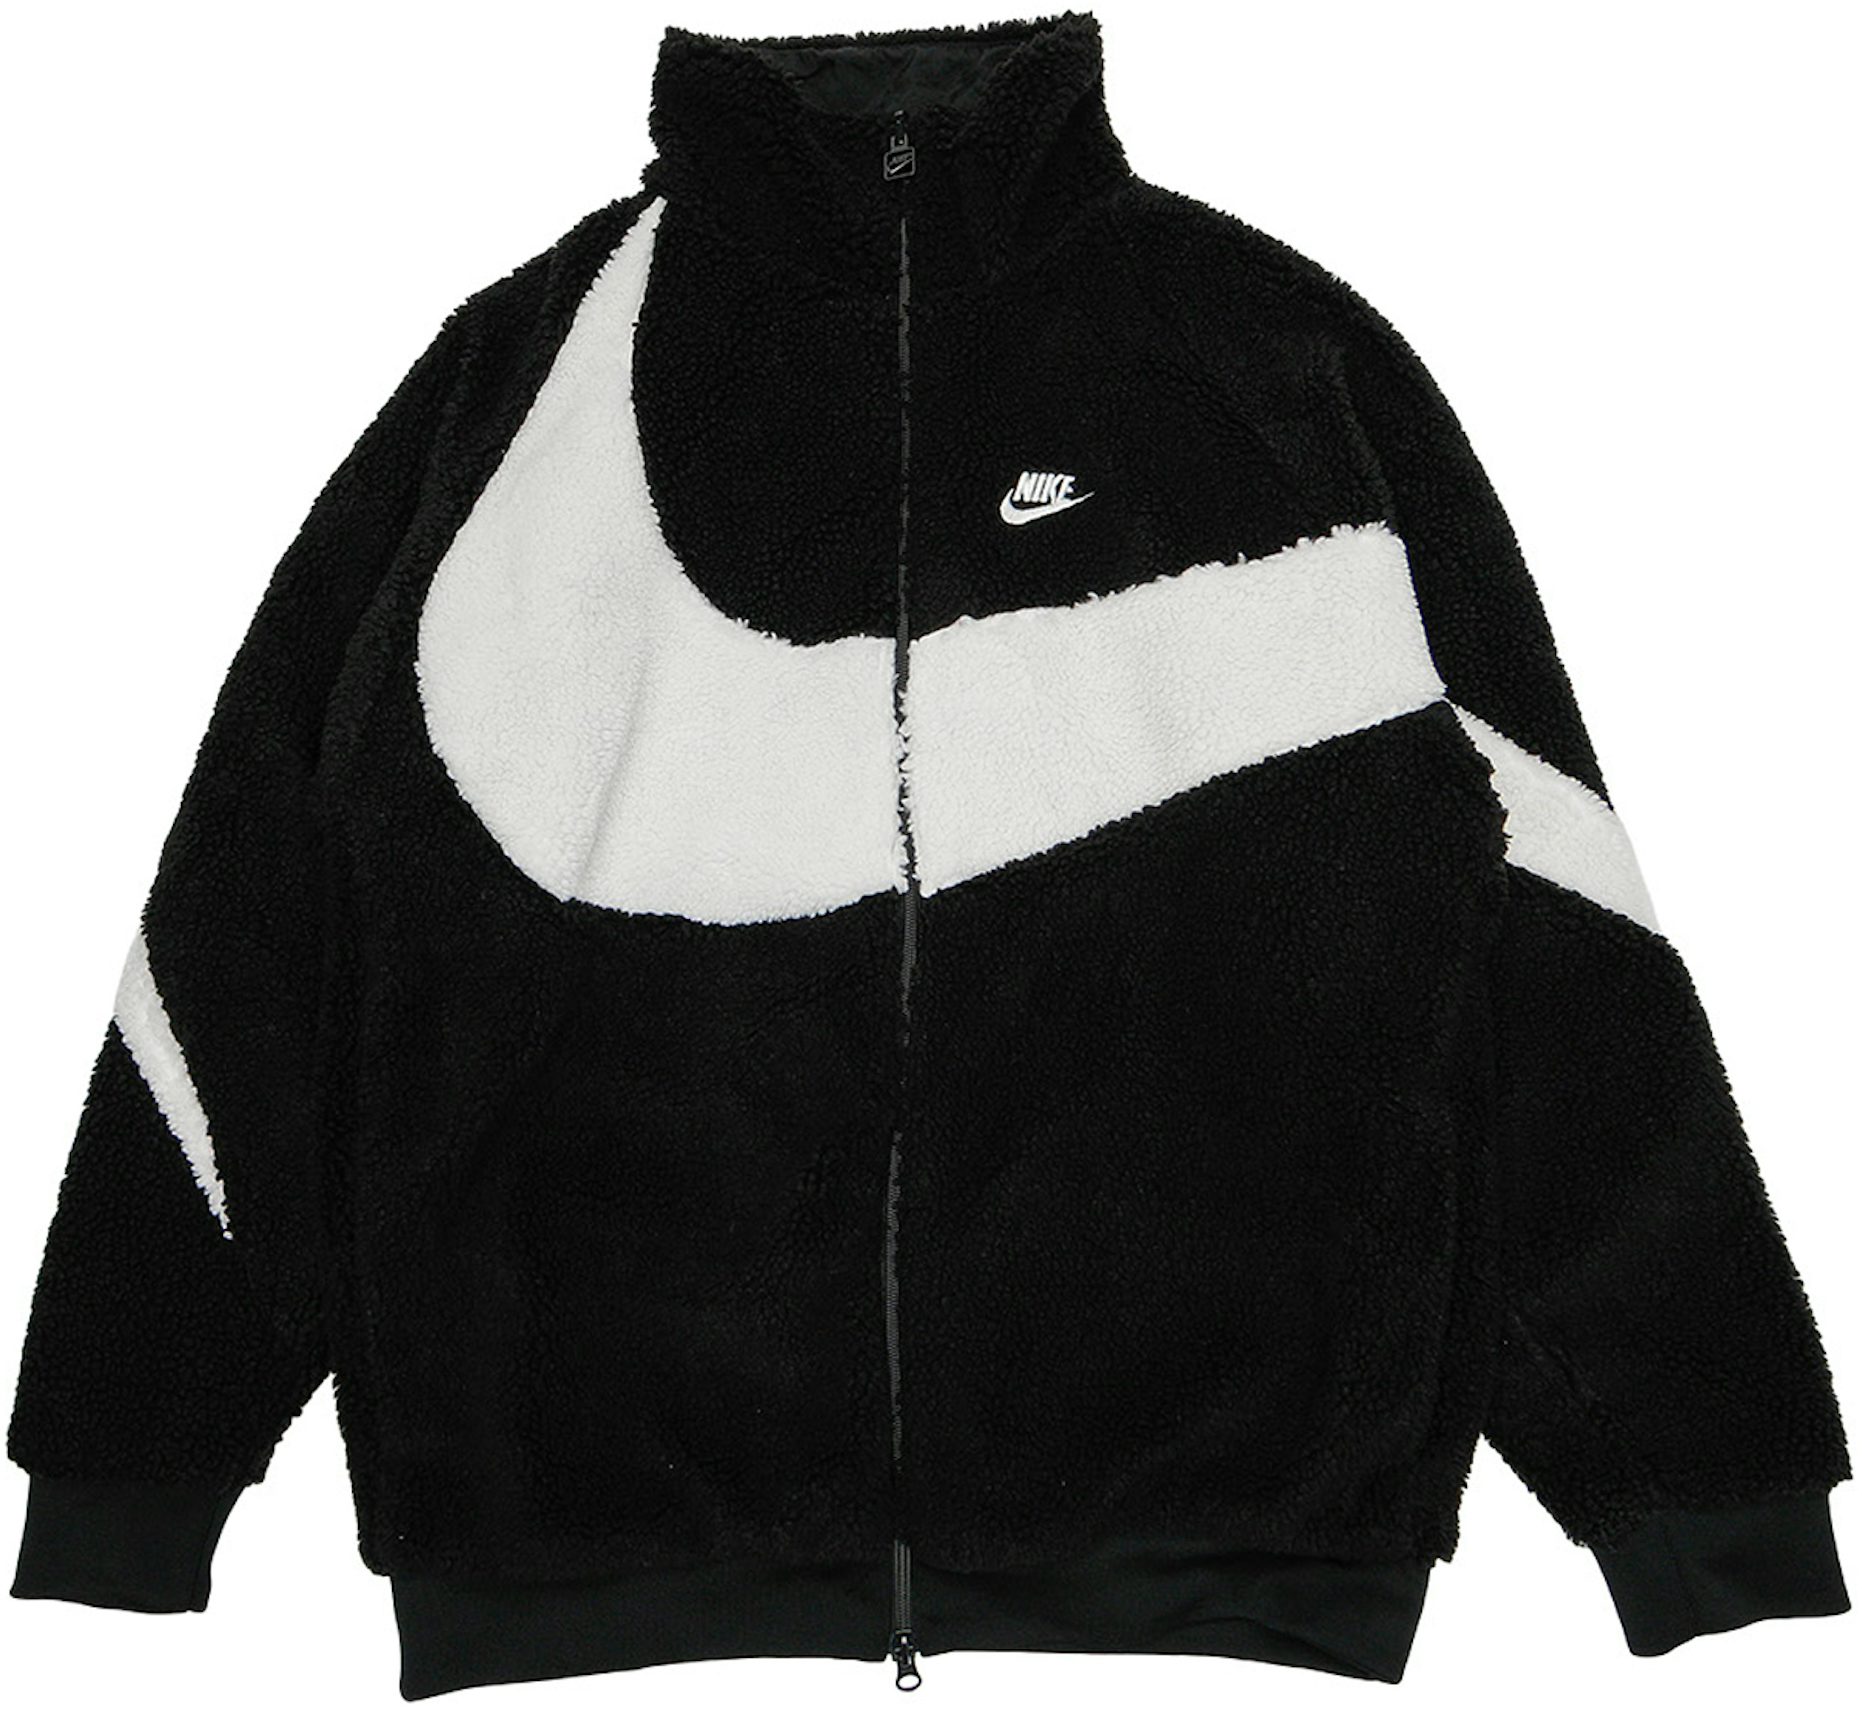 Nike Reversible Swoosh Full Zip Jacket Black/Anthracite/Anthracite